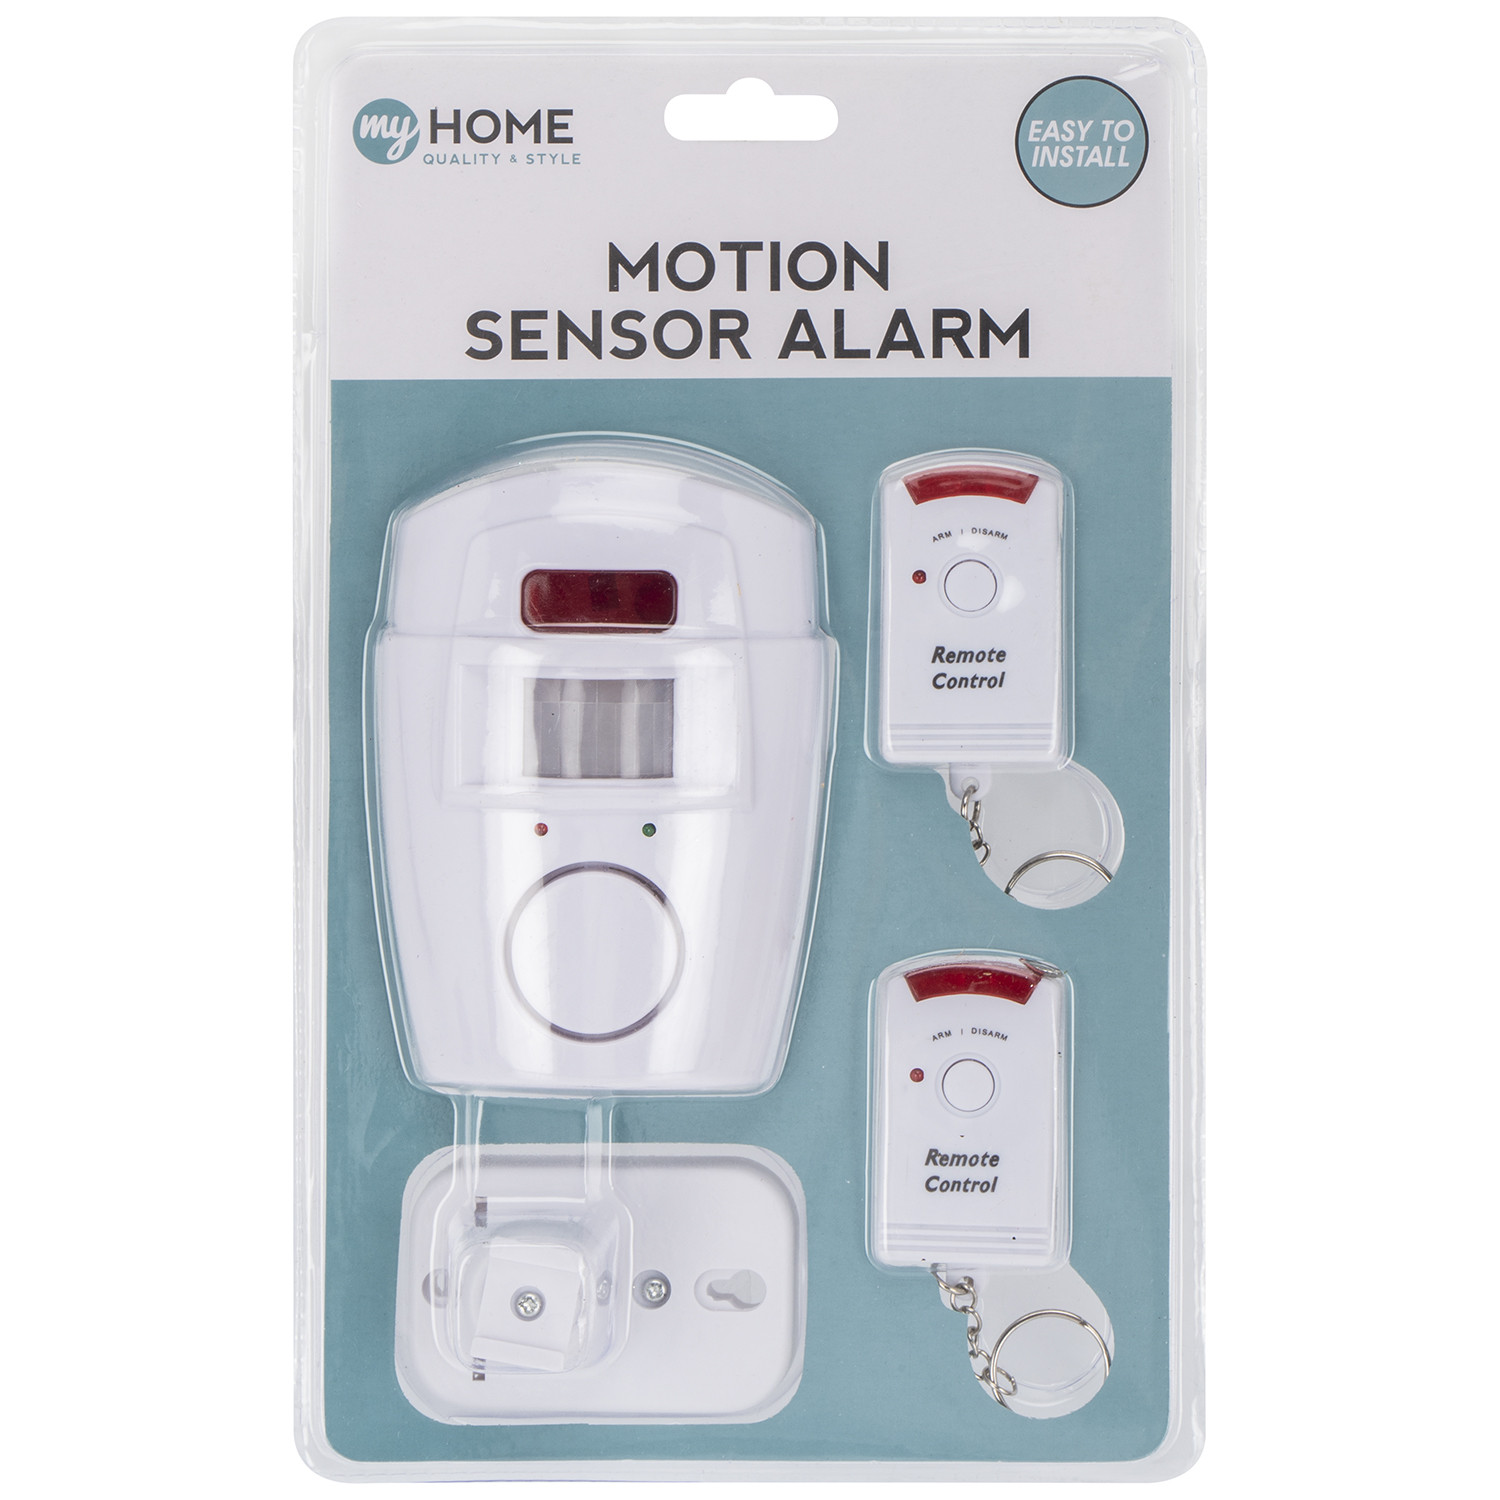 My Home Motion Sensor Alarm Image